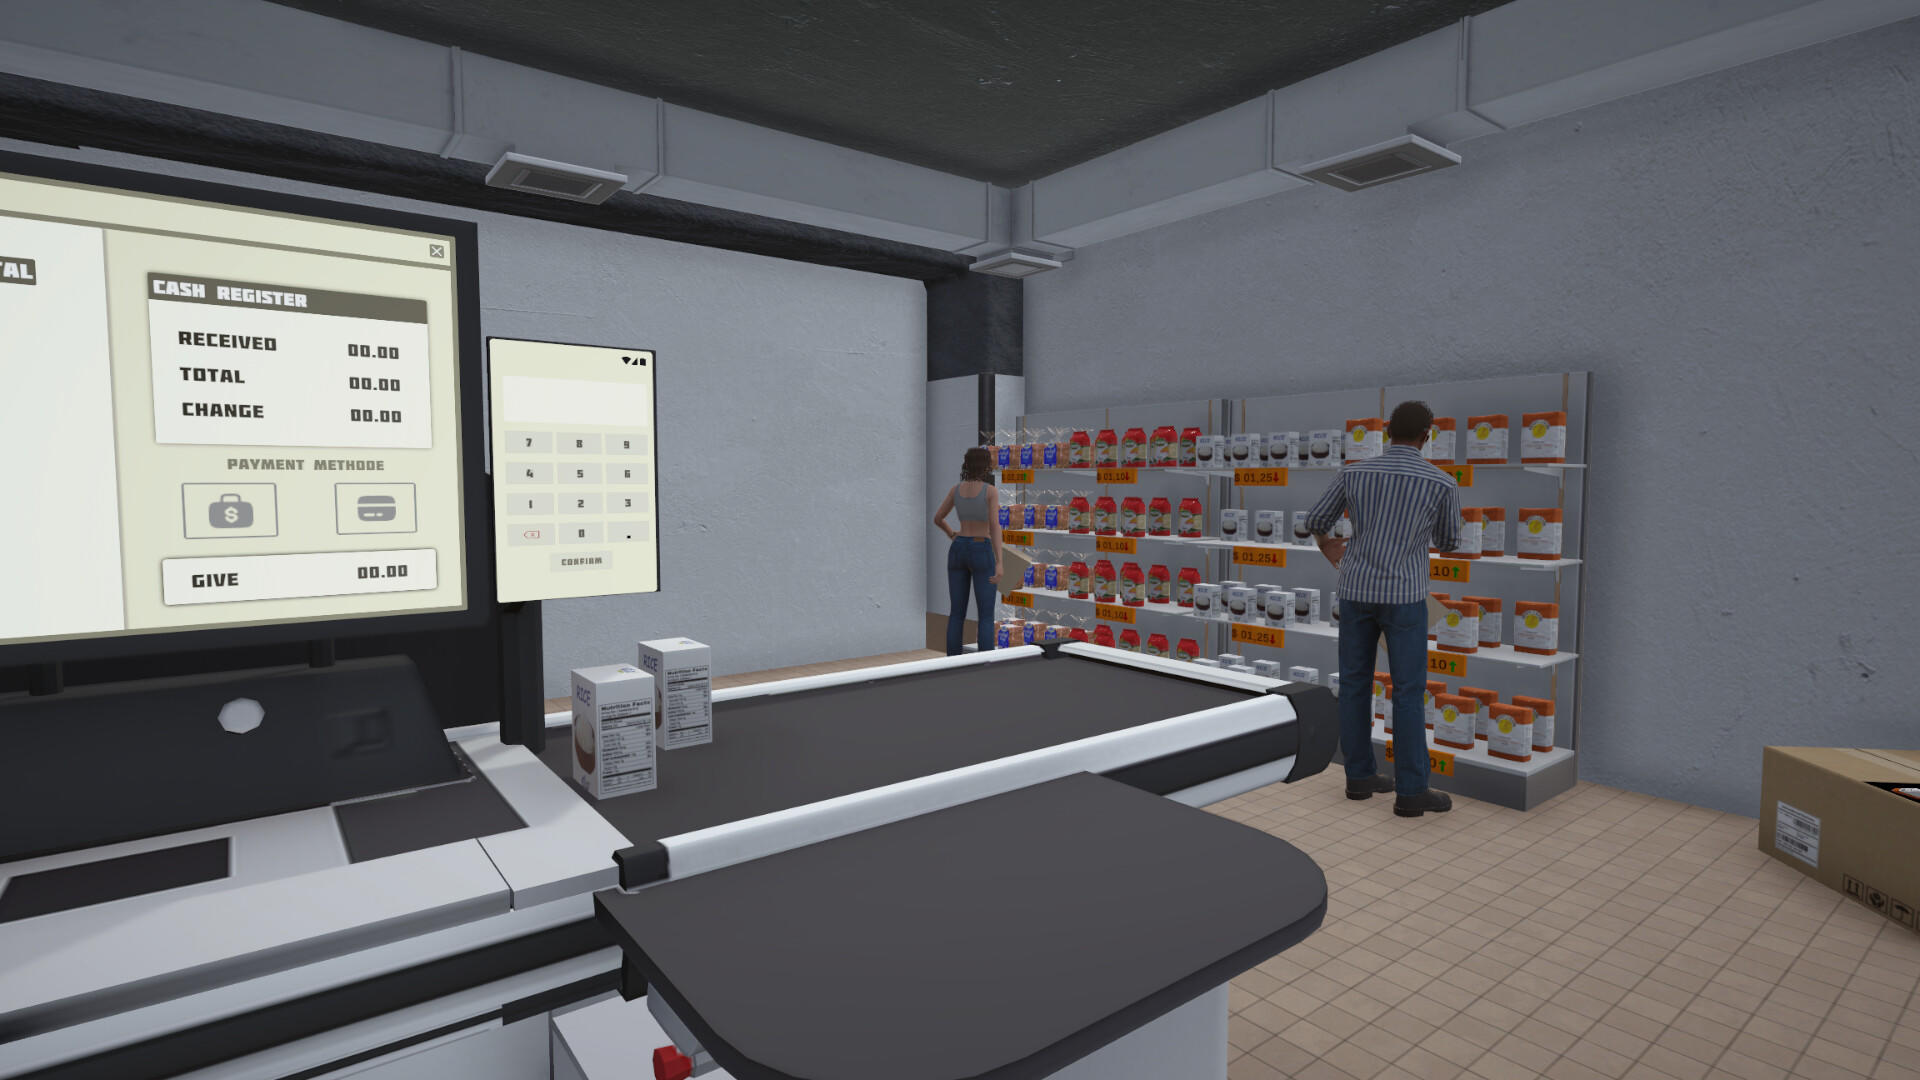 siMarket Supermarket Simulator 게임 스크린 샷